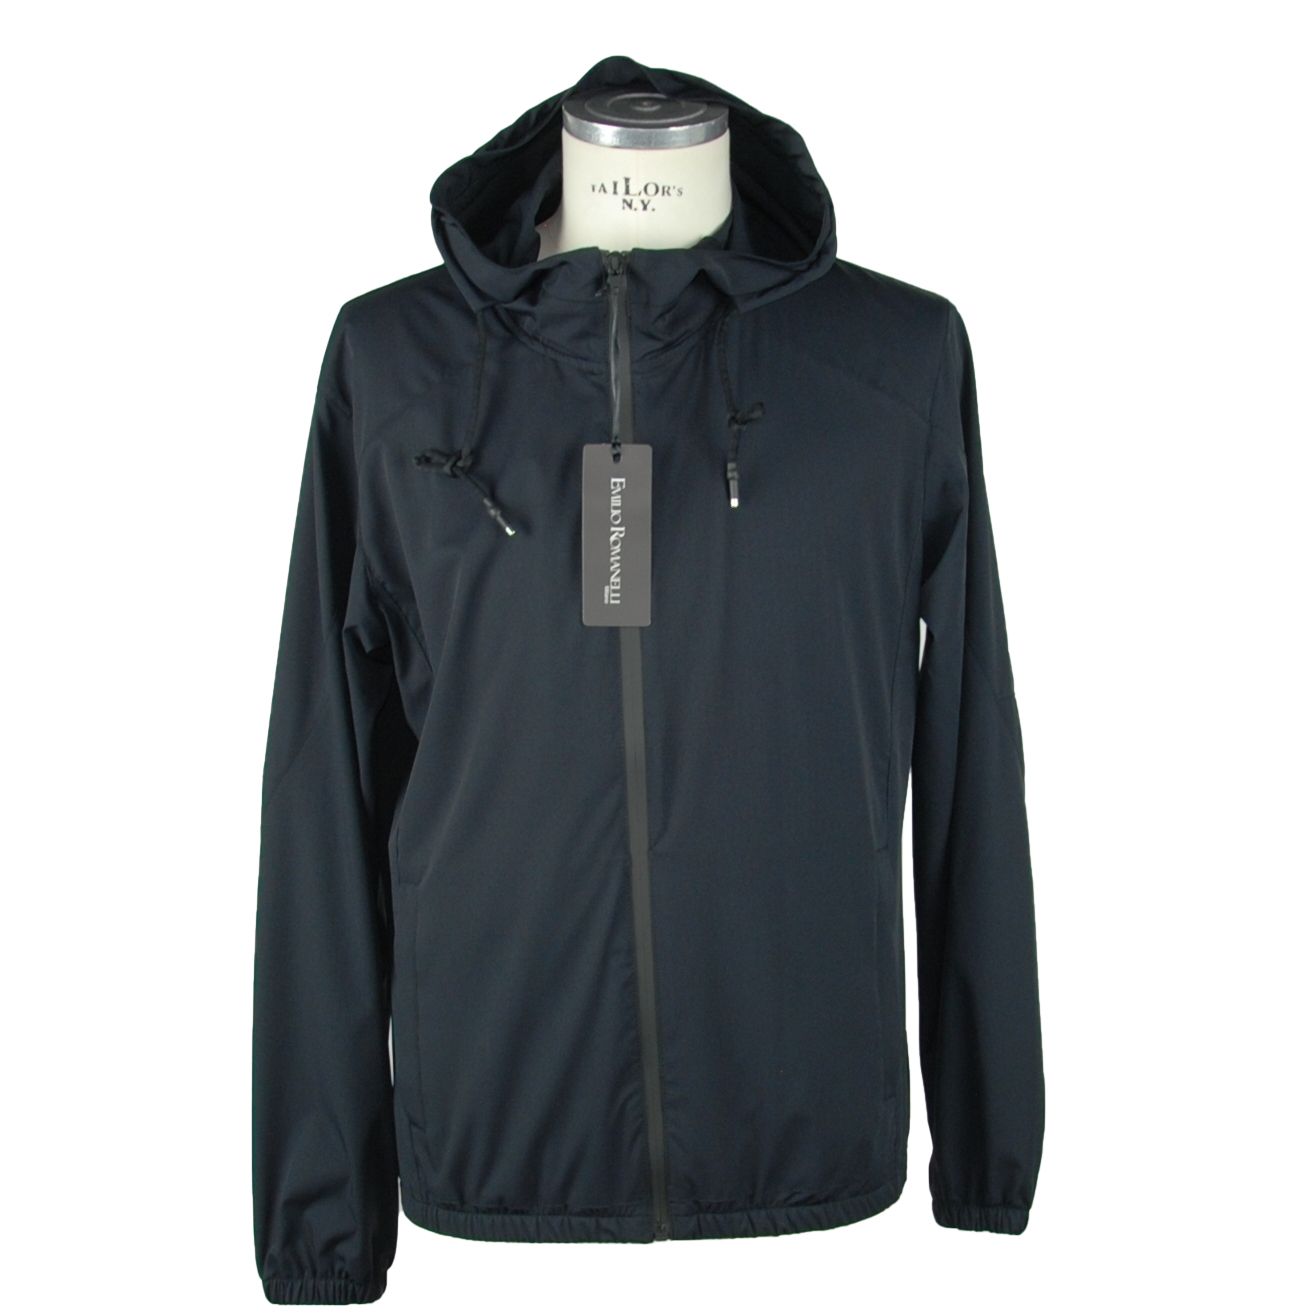 Emilio Romanelli Sleek Hooded Zip Jacket in Black